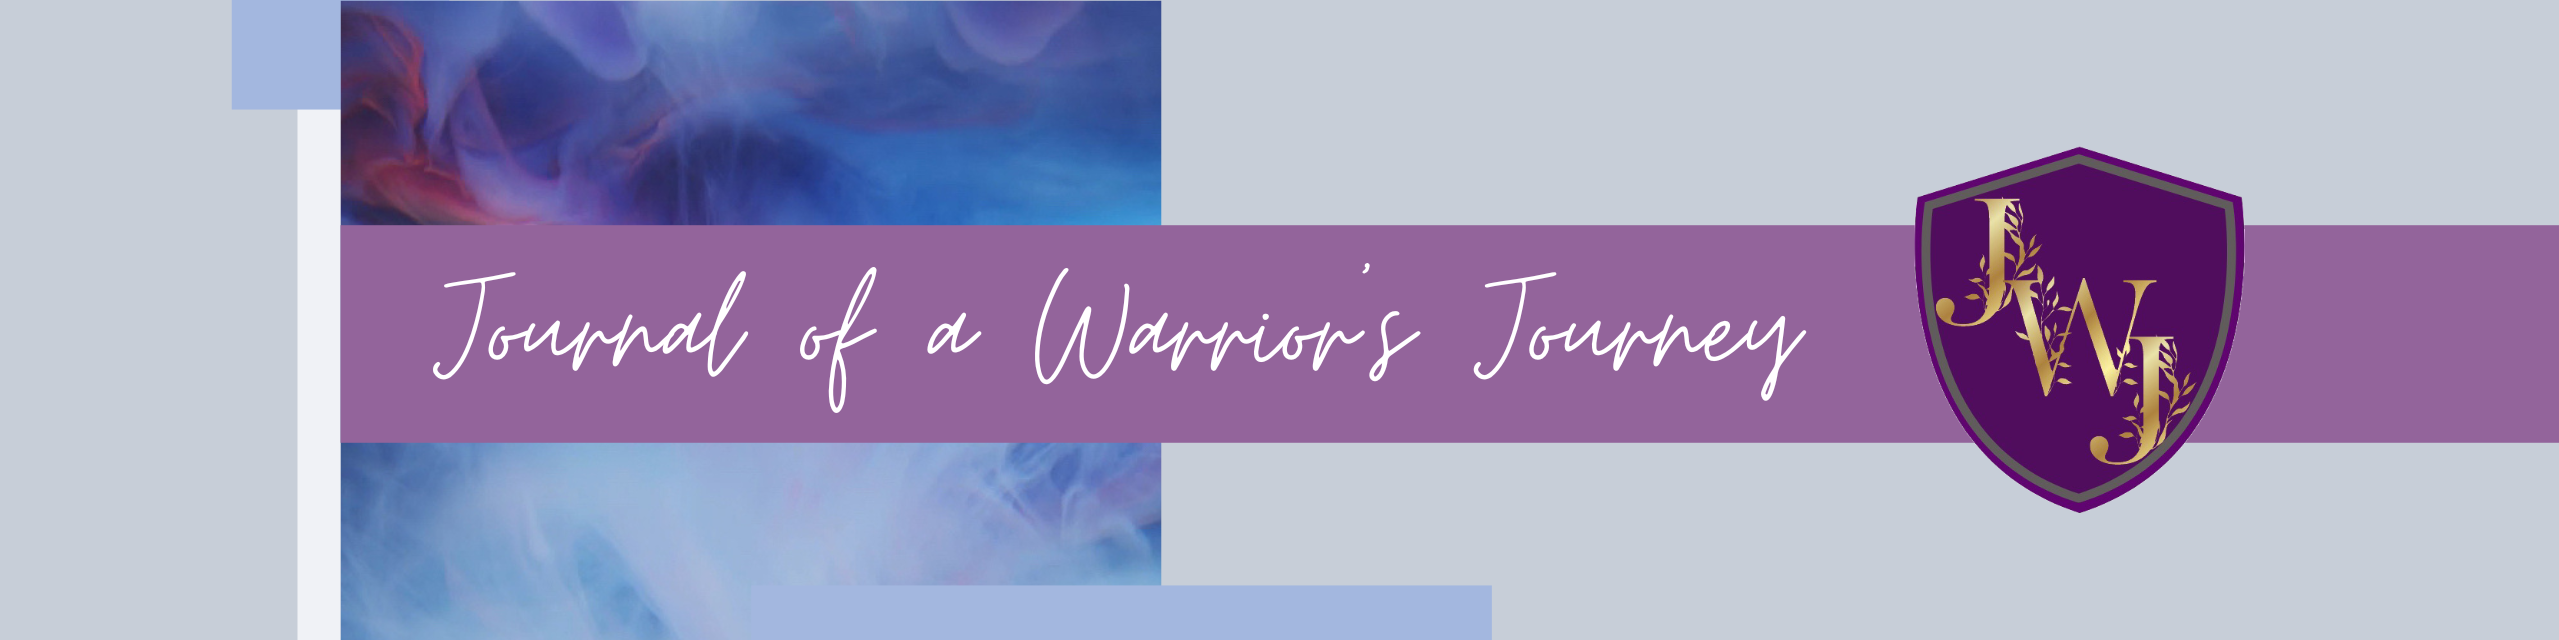 Journal of a Warrior's Journey